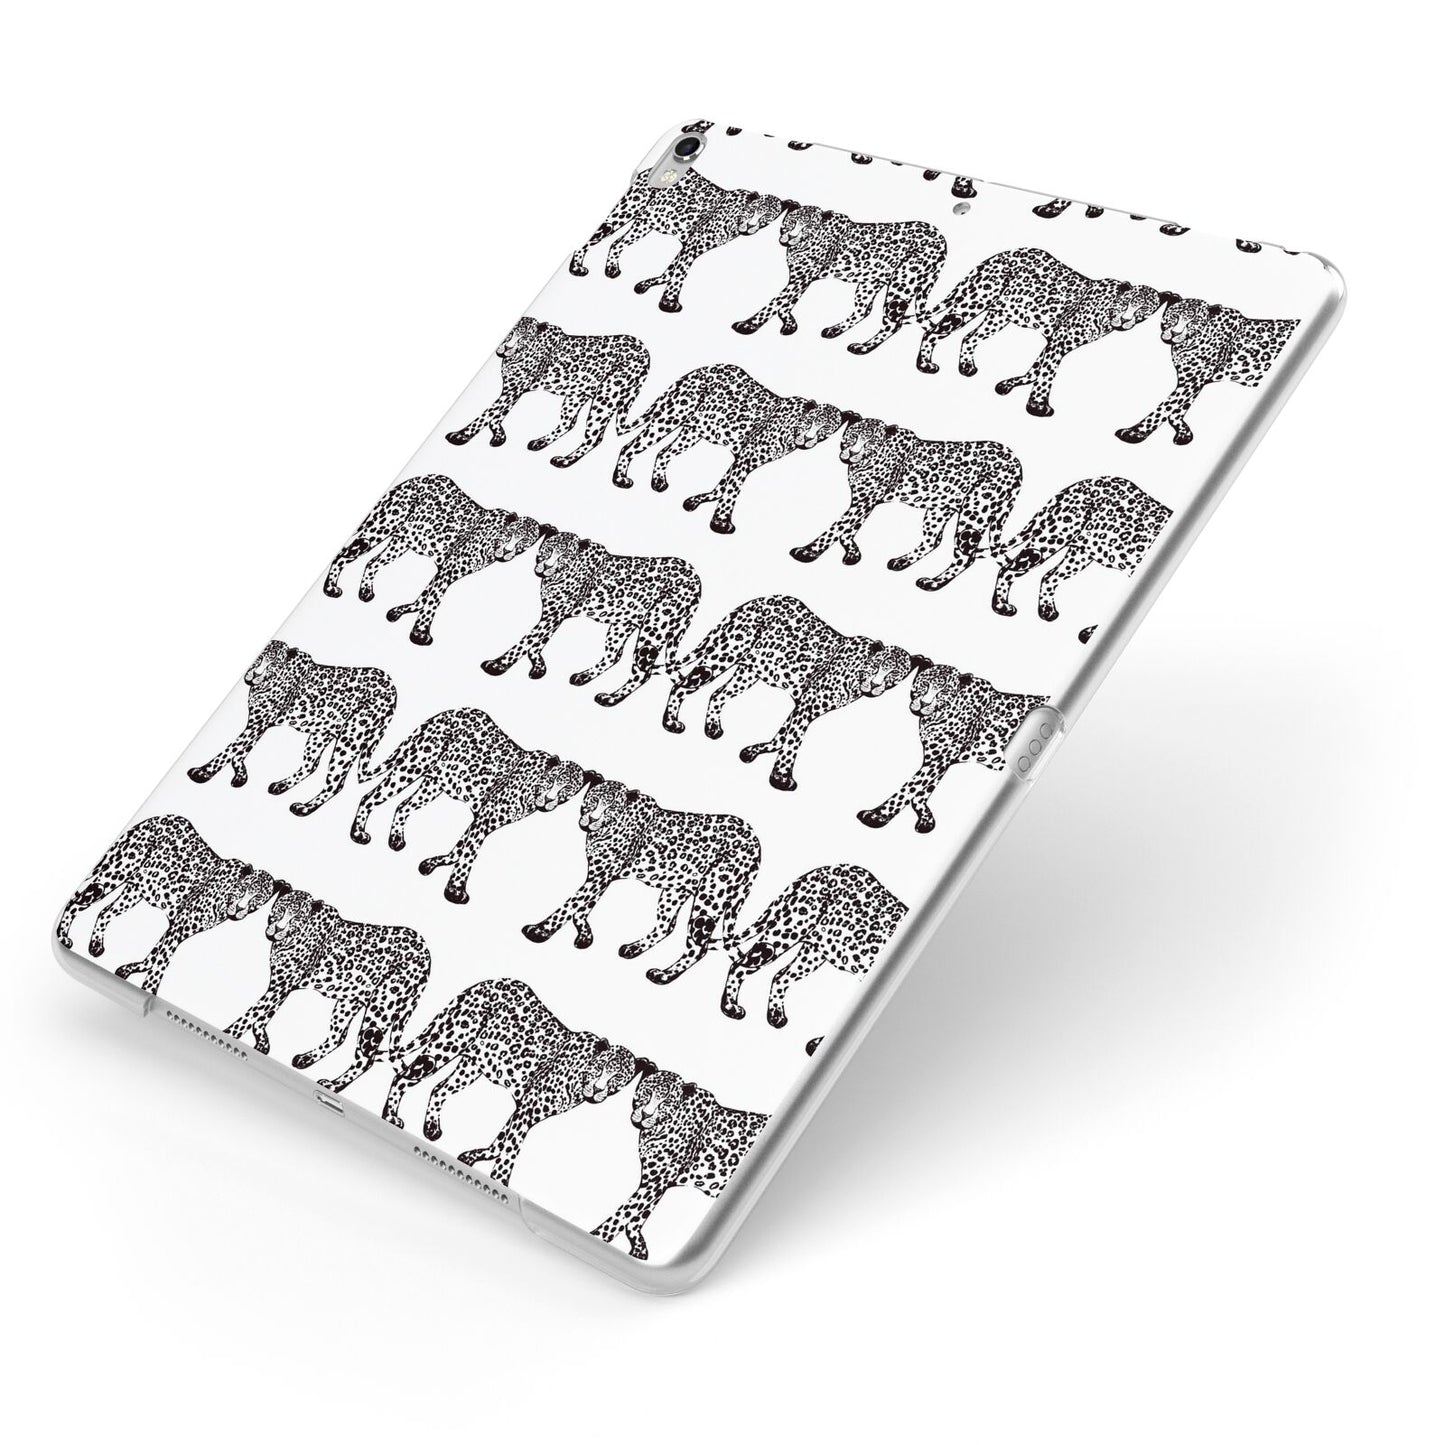 Monochrome Mirrored Leopard Print Apple iPad Case on Silver iPad Side View